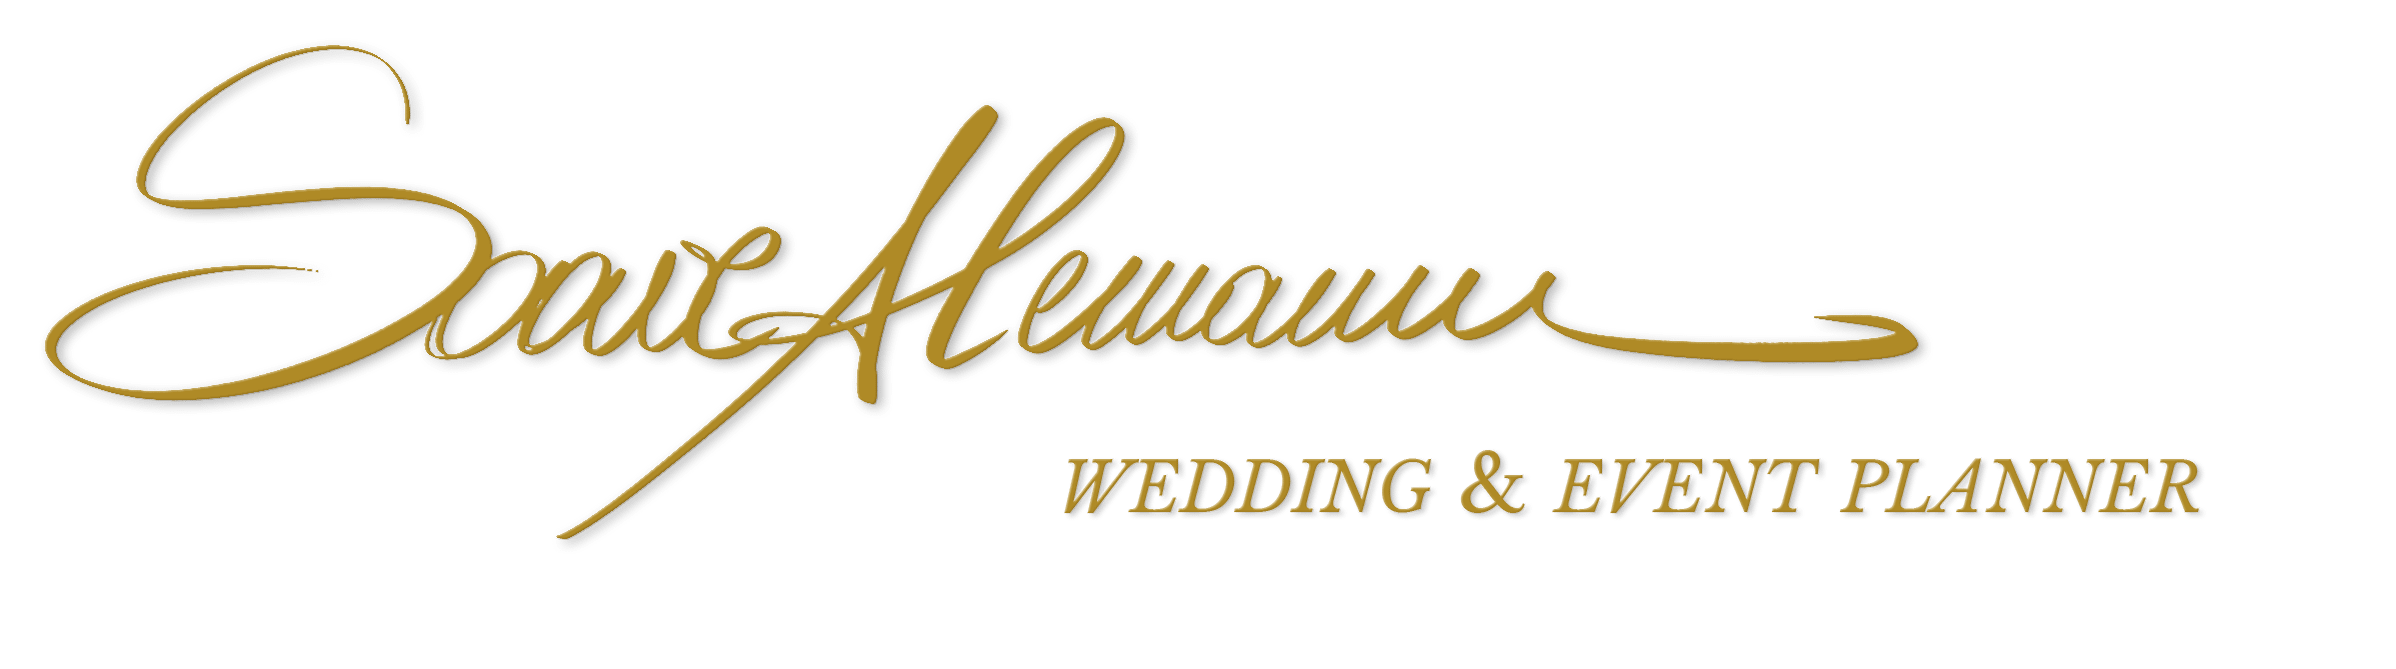 Soave Alemanno - Wedding & Event Planner